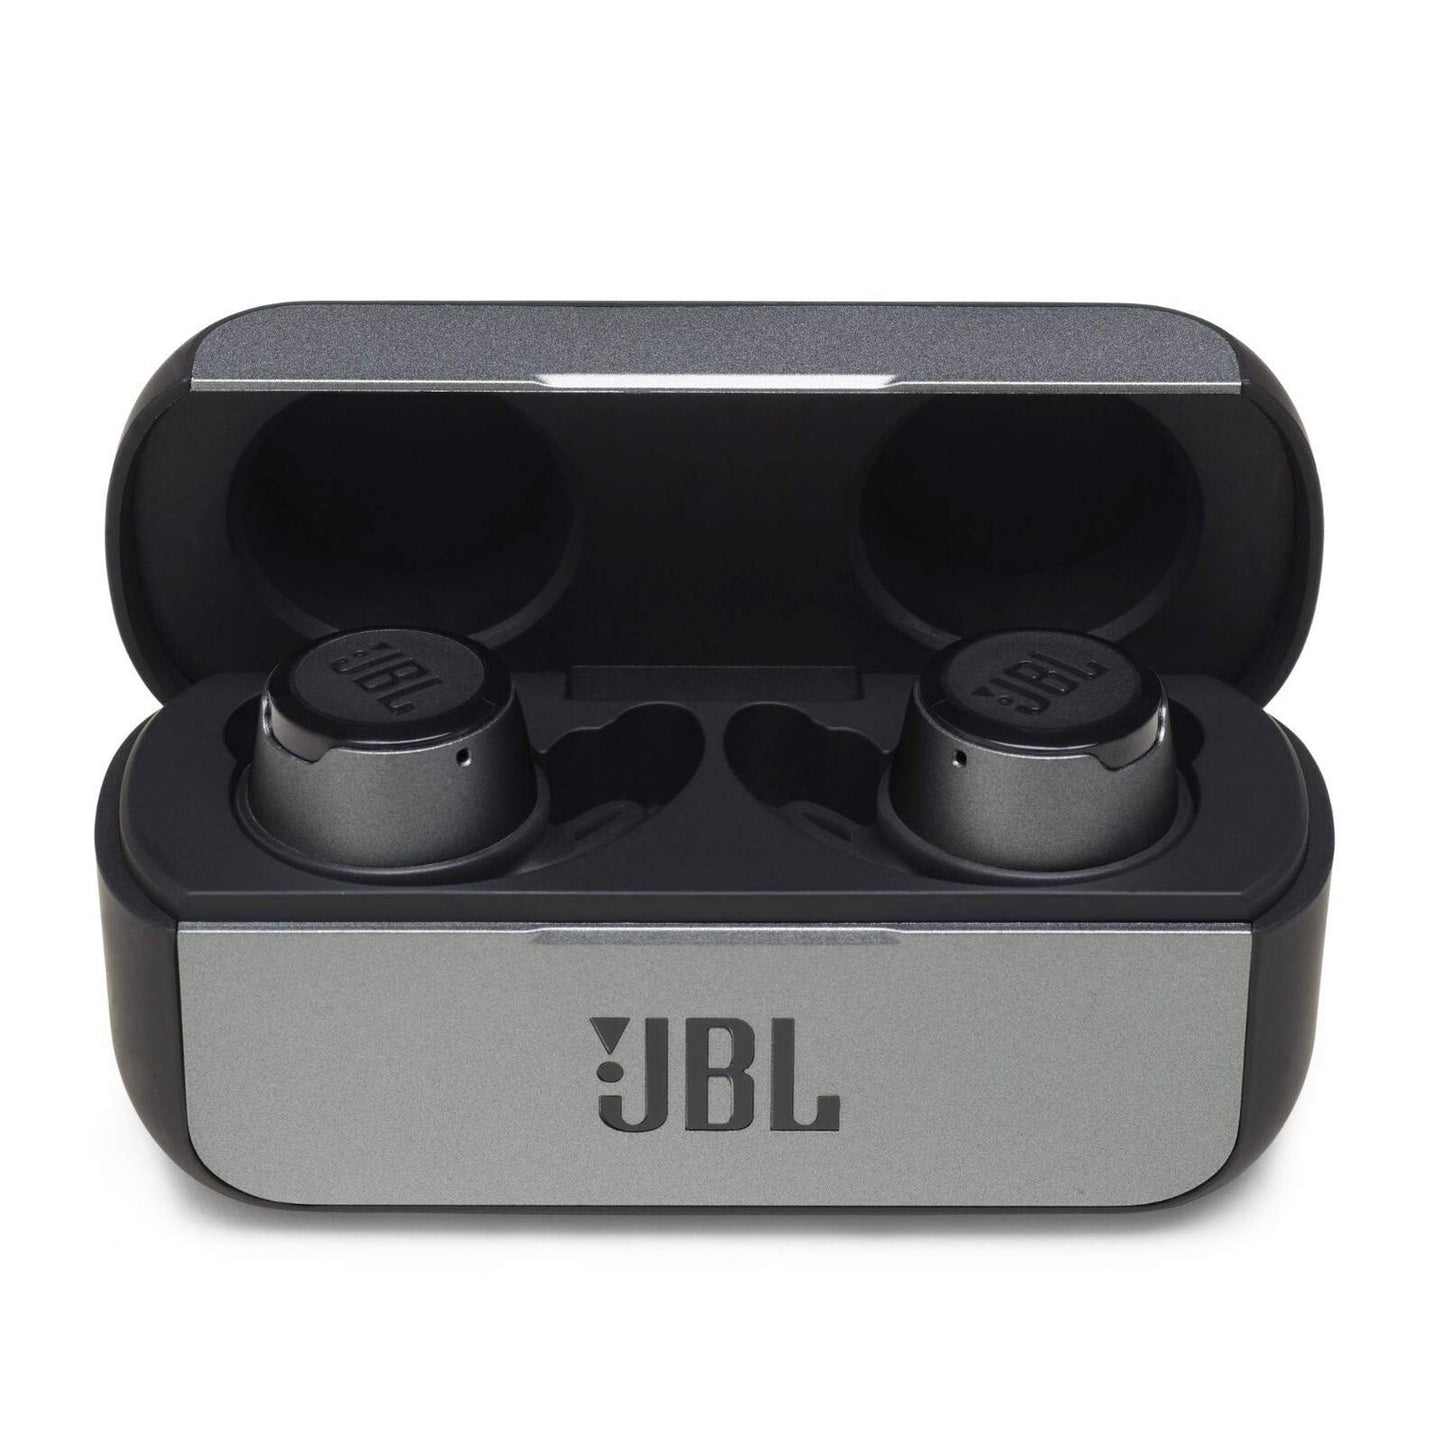 JBL Reflect Flow Wireless Sport Earbuds - Black (Refurbished)